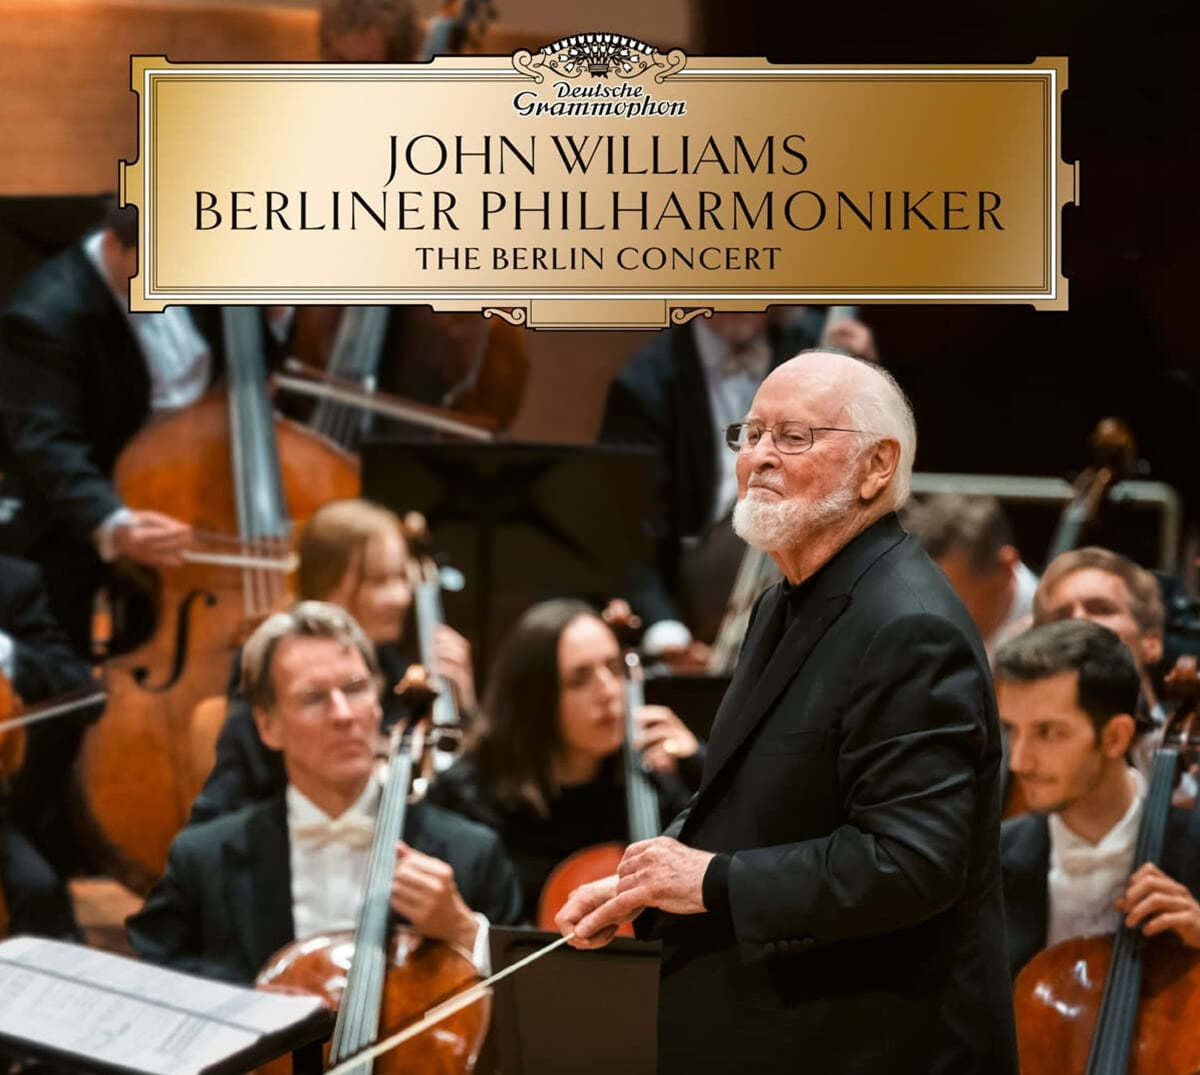 John Williams / Berliner Philharmoniker 존 윌리엄스 - 베를린 콘서트 (The Berlin Concert)